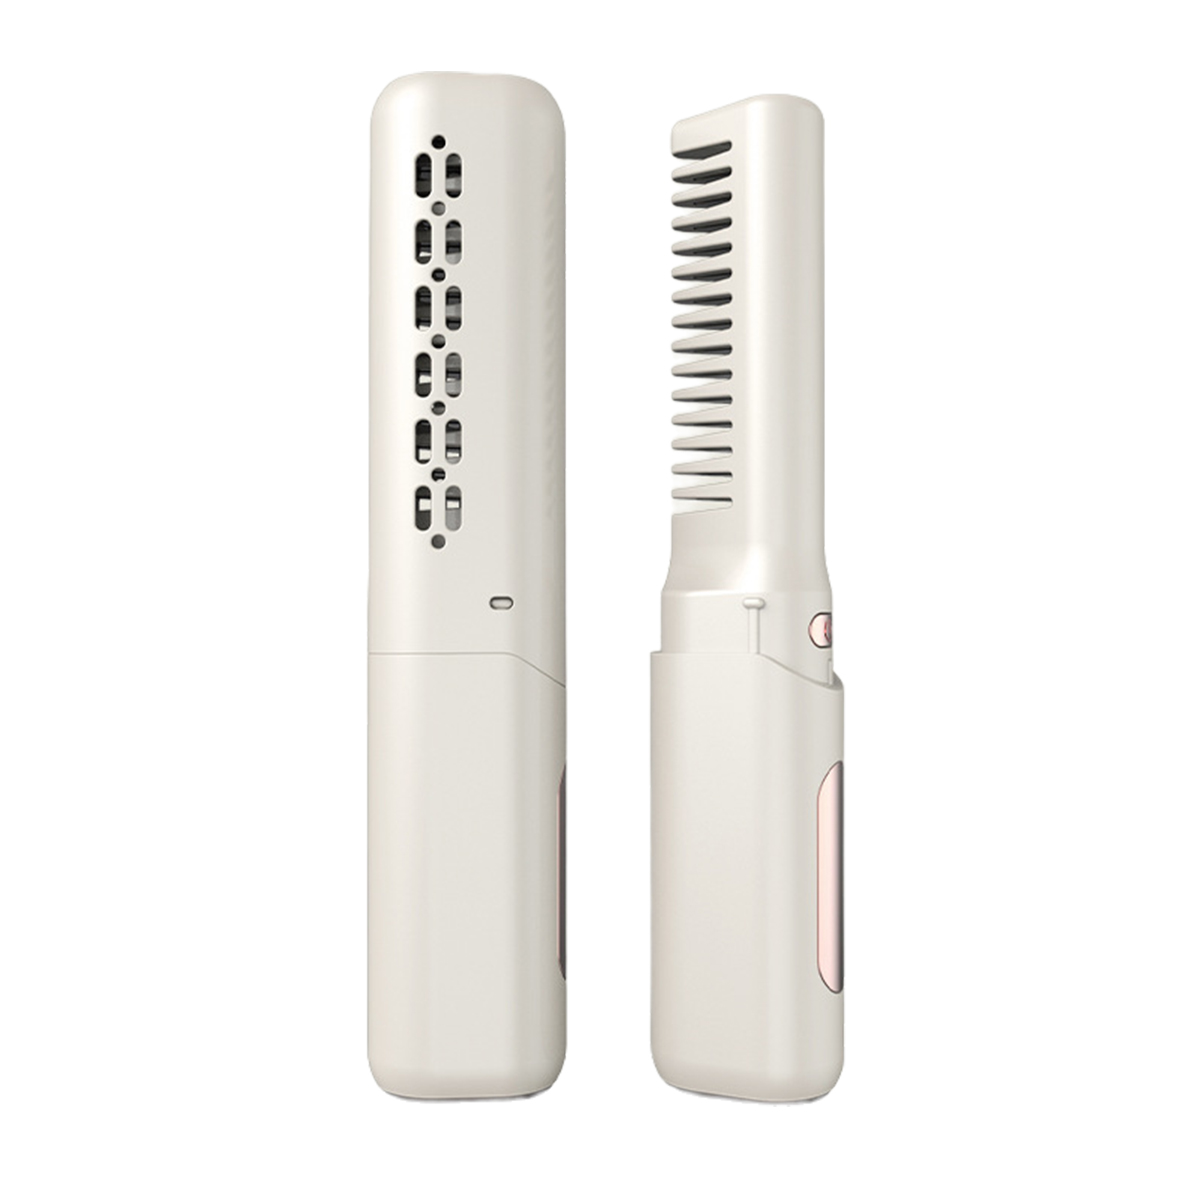 BRIGHTAKE Drahtloser LCD Mini Haarglätter für 3 Kamm | Tragbarer Glätter Temperaturstufen: Haarglättungskamm, Unterwegs